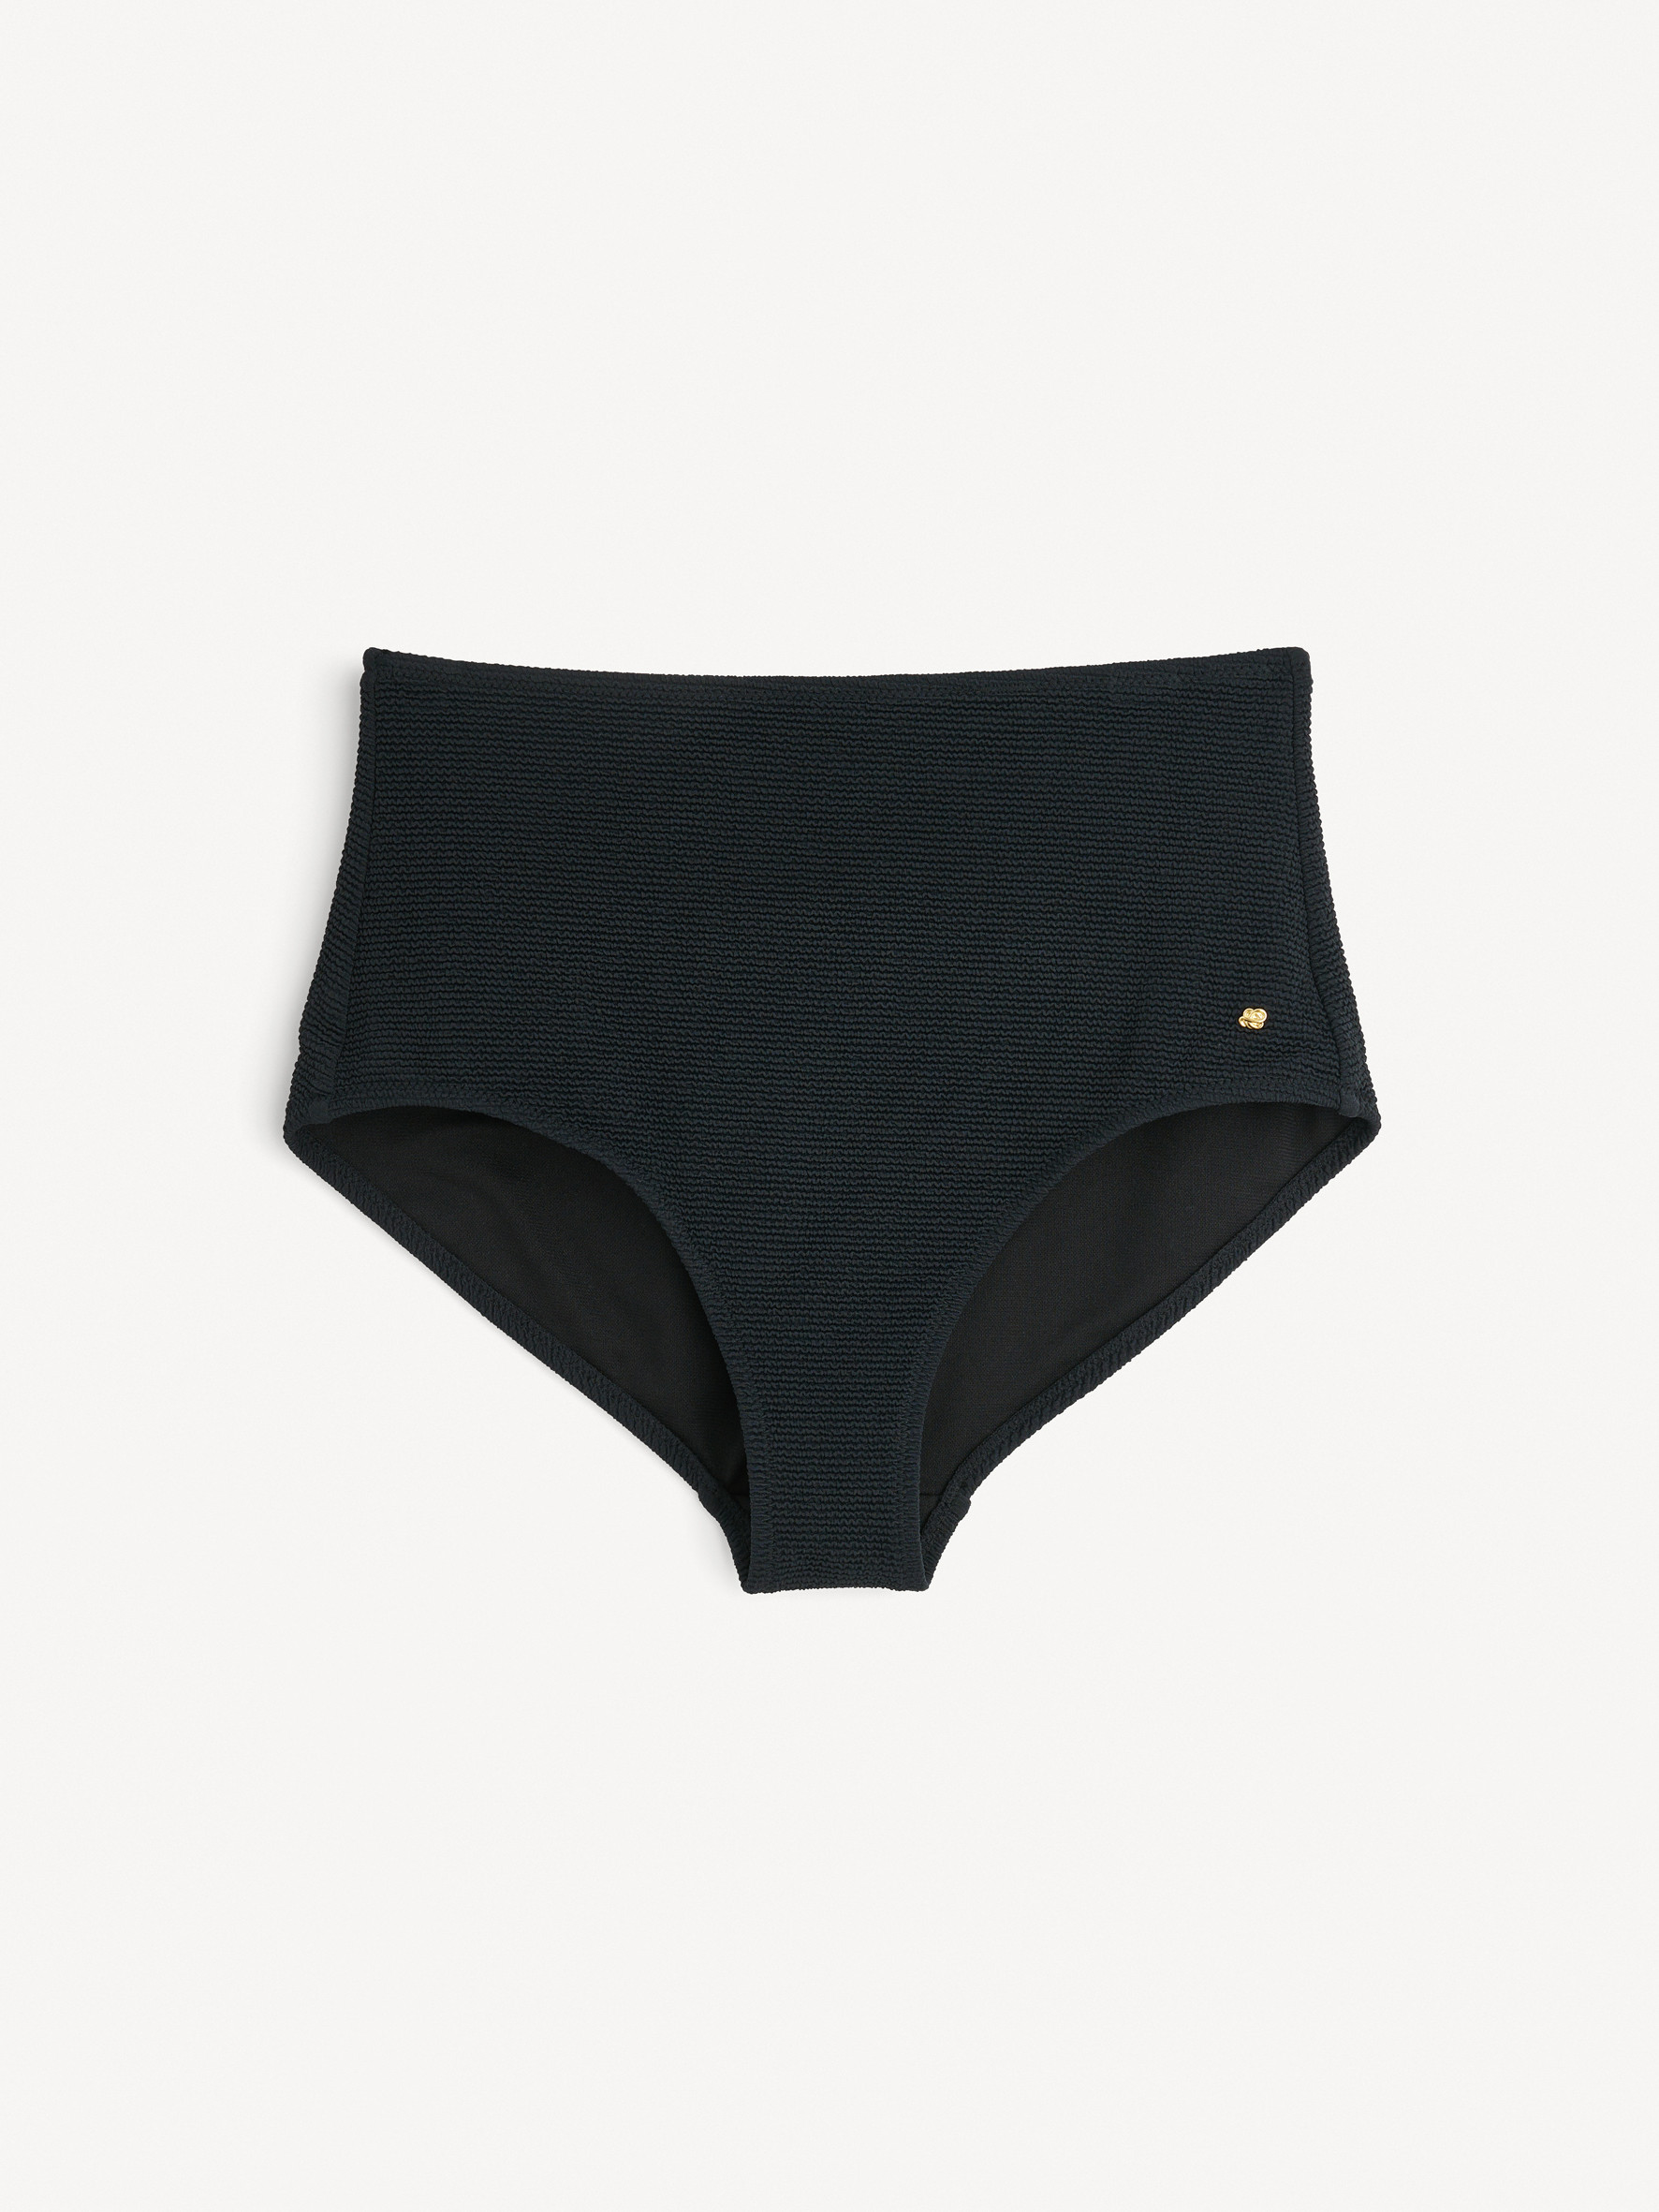 Belira bikini bottoms - Buy Clothing online